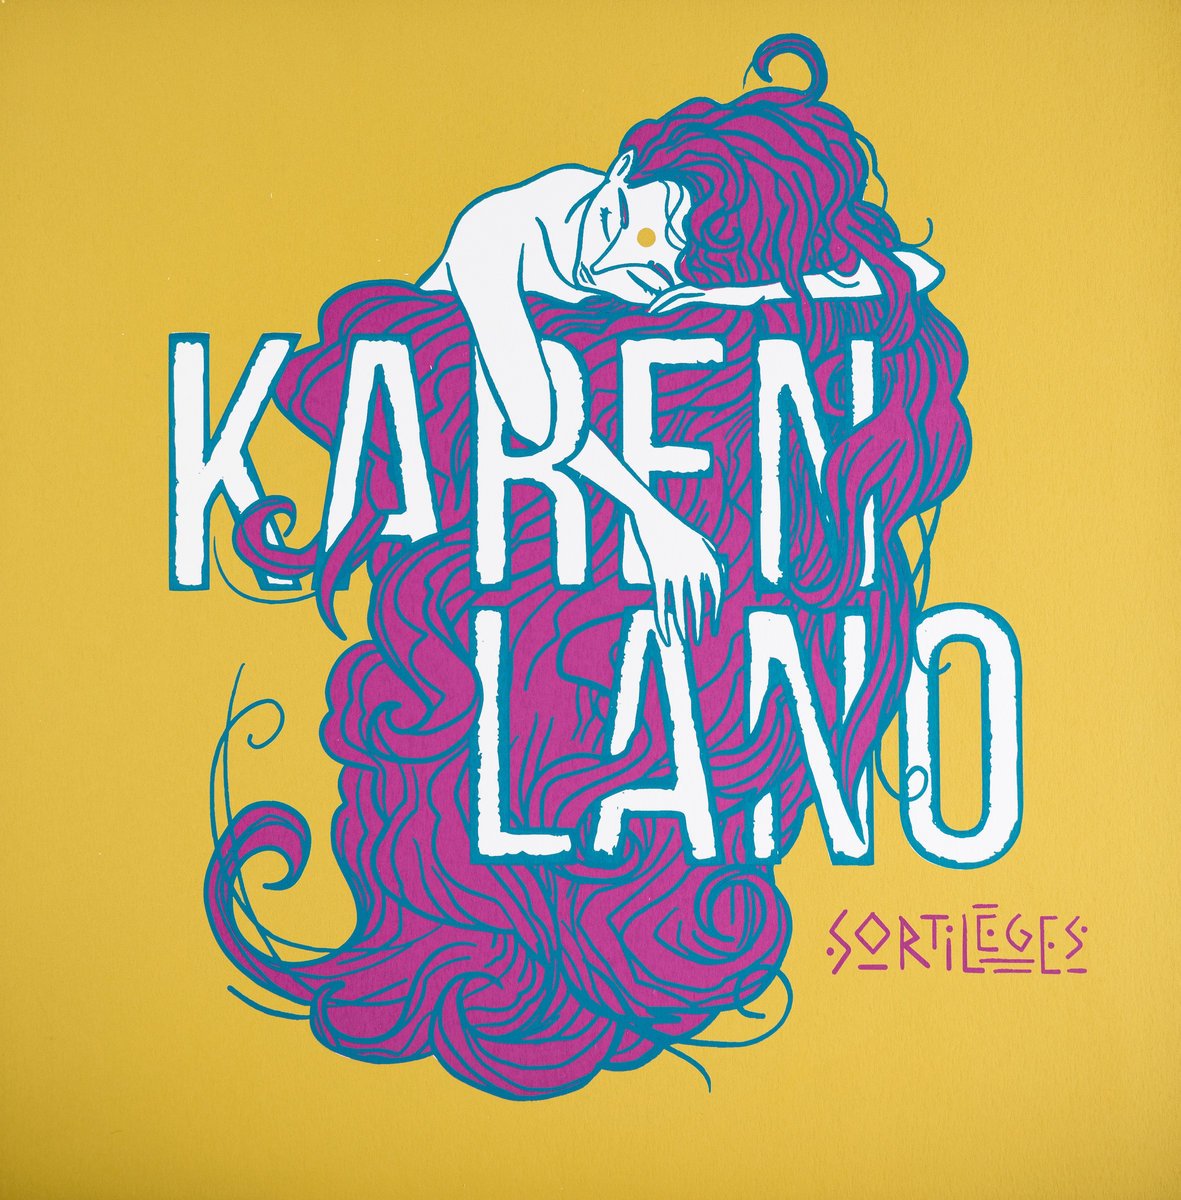 Karen Lano - Sortilèges